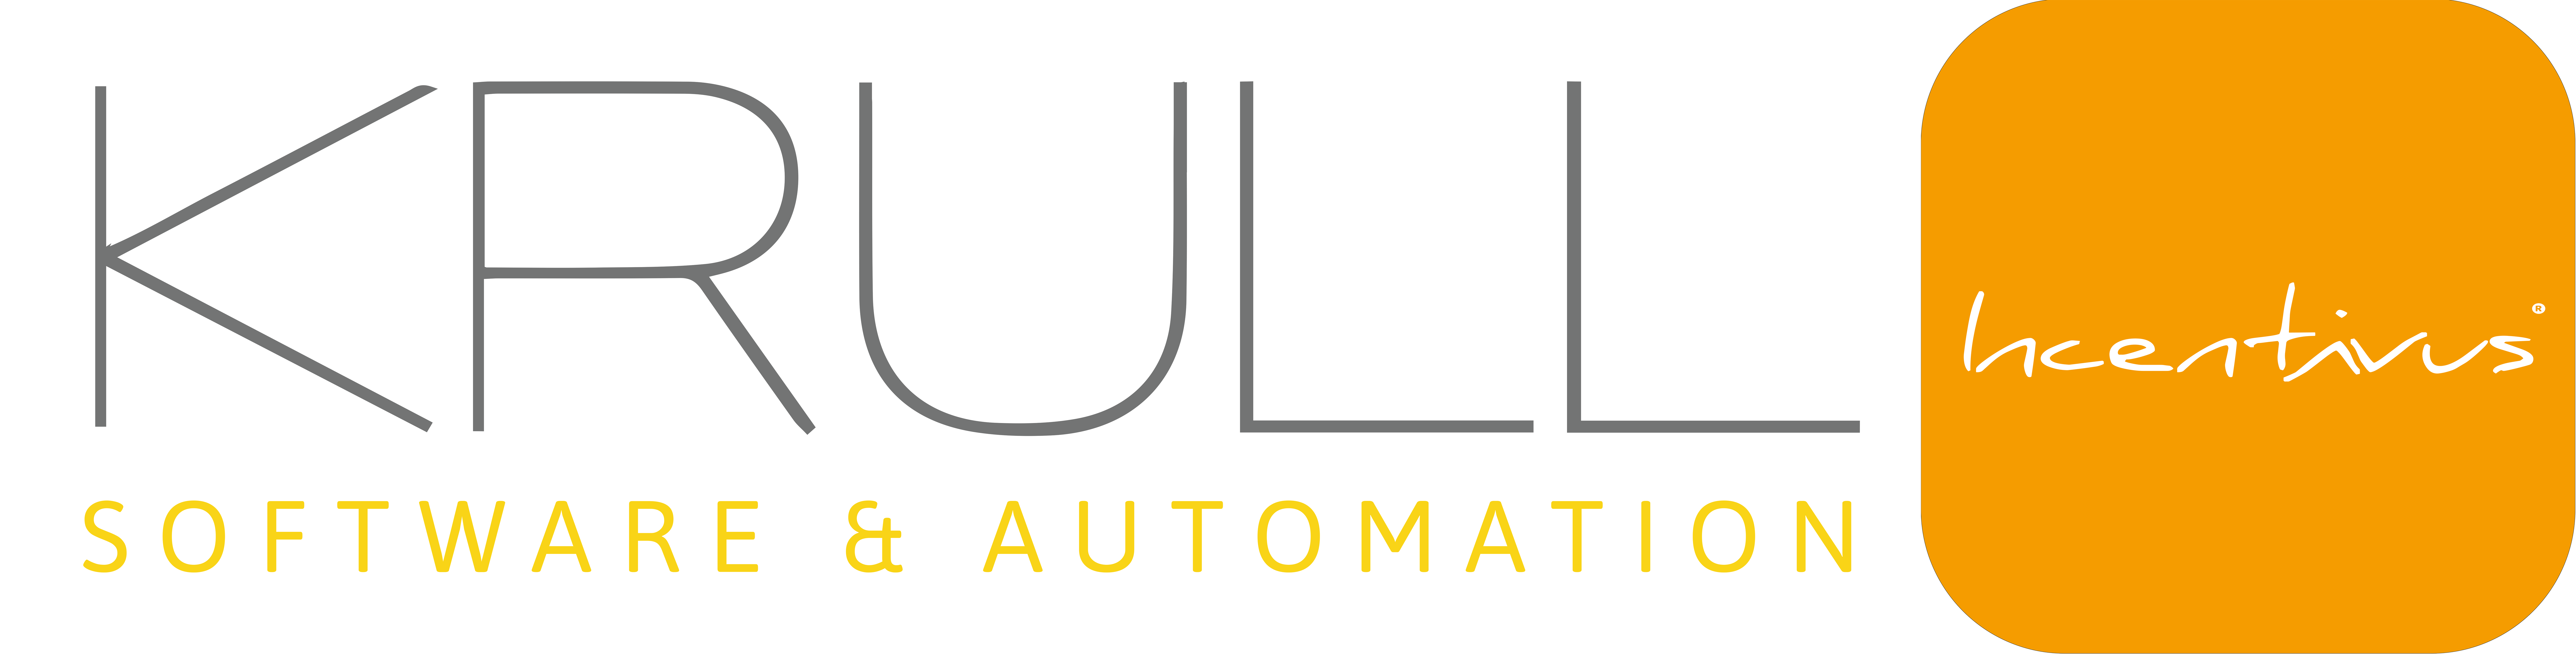 Krull Software & Automation GmbH